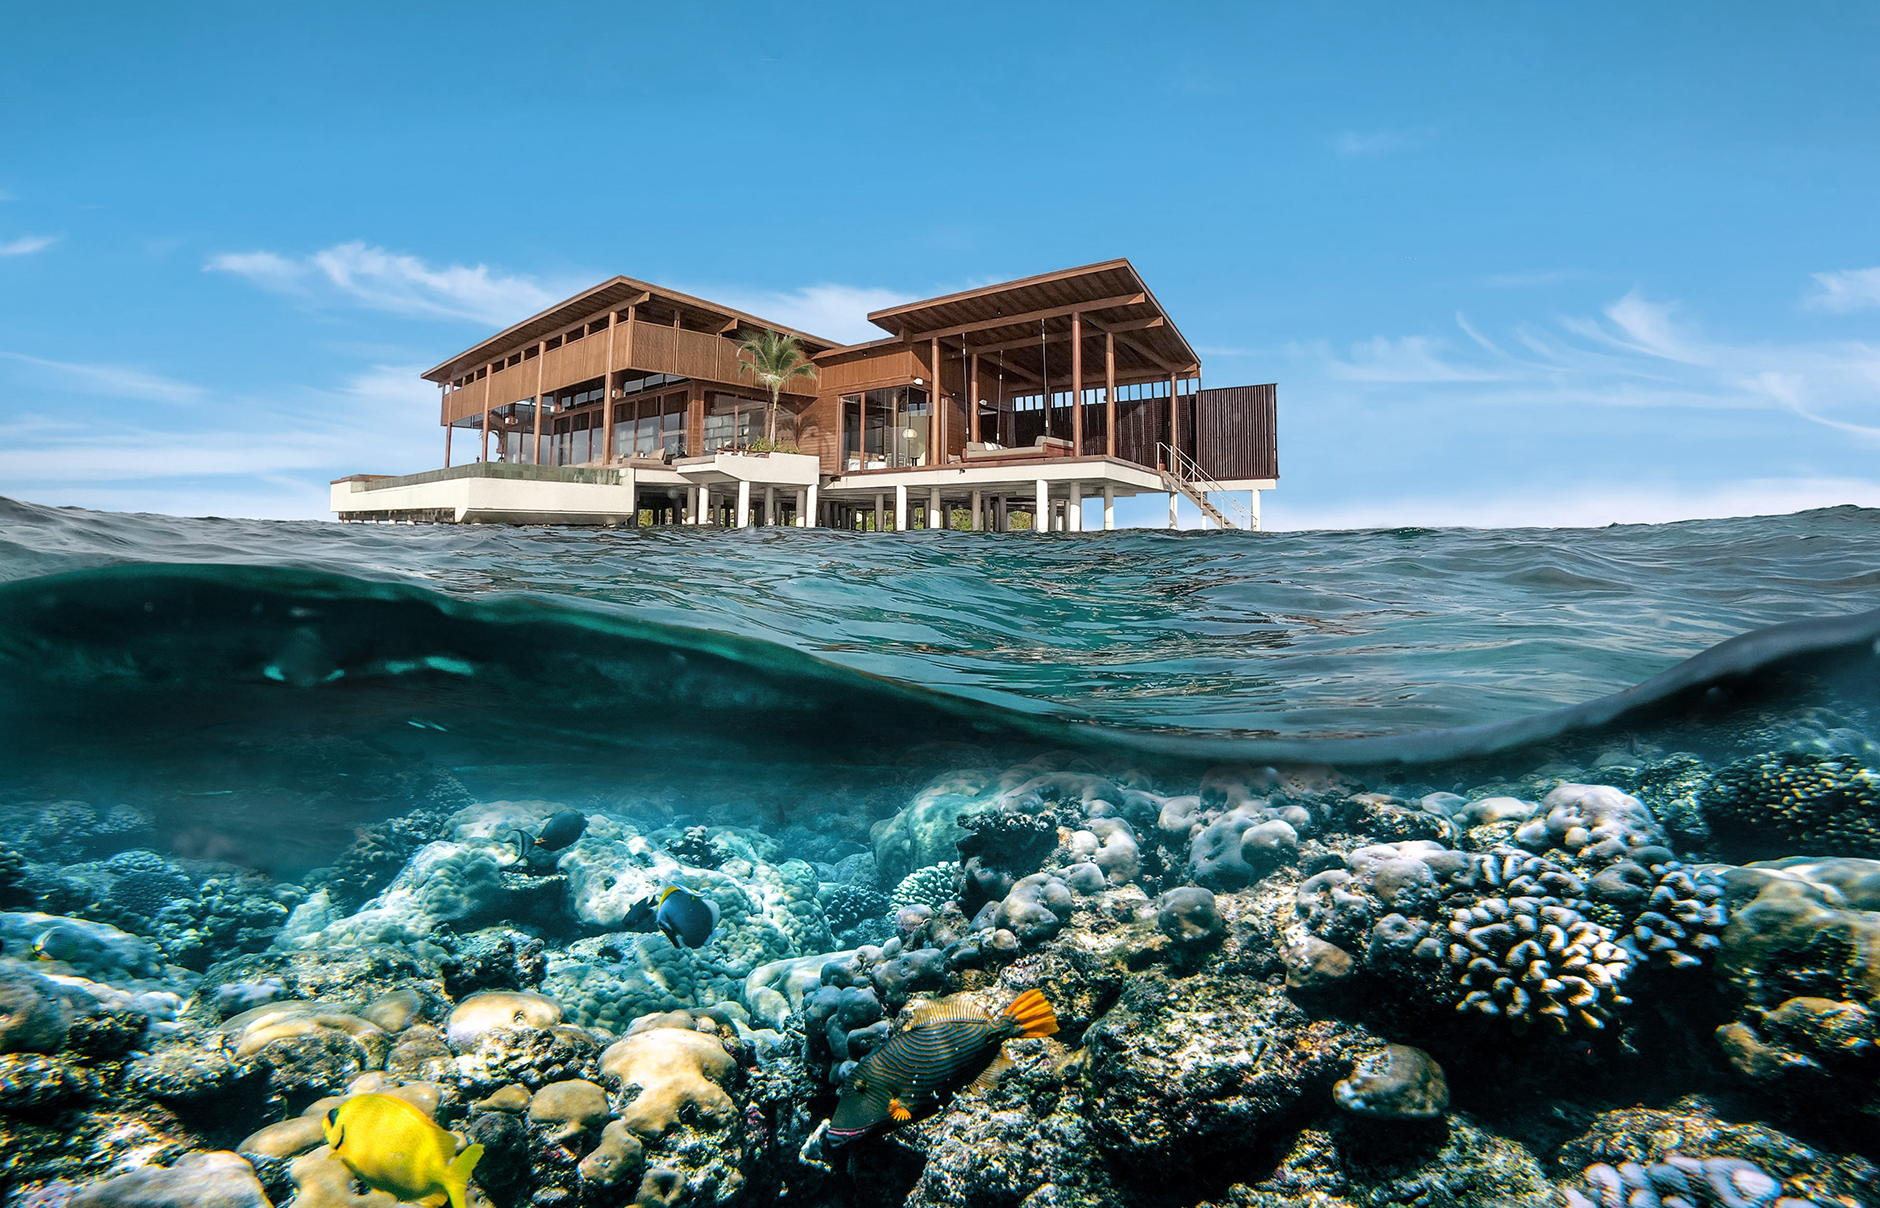 Park Hyatt Maldives, Hadahaa, Maldives. Luxury Hotel Review by TravelPlusStyle. Photo © Hyatt Corporation